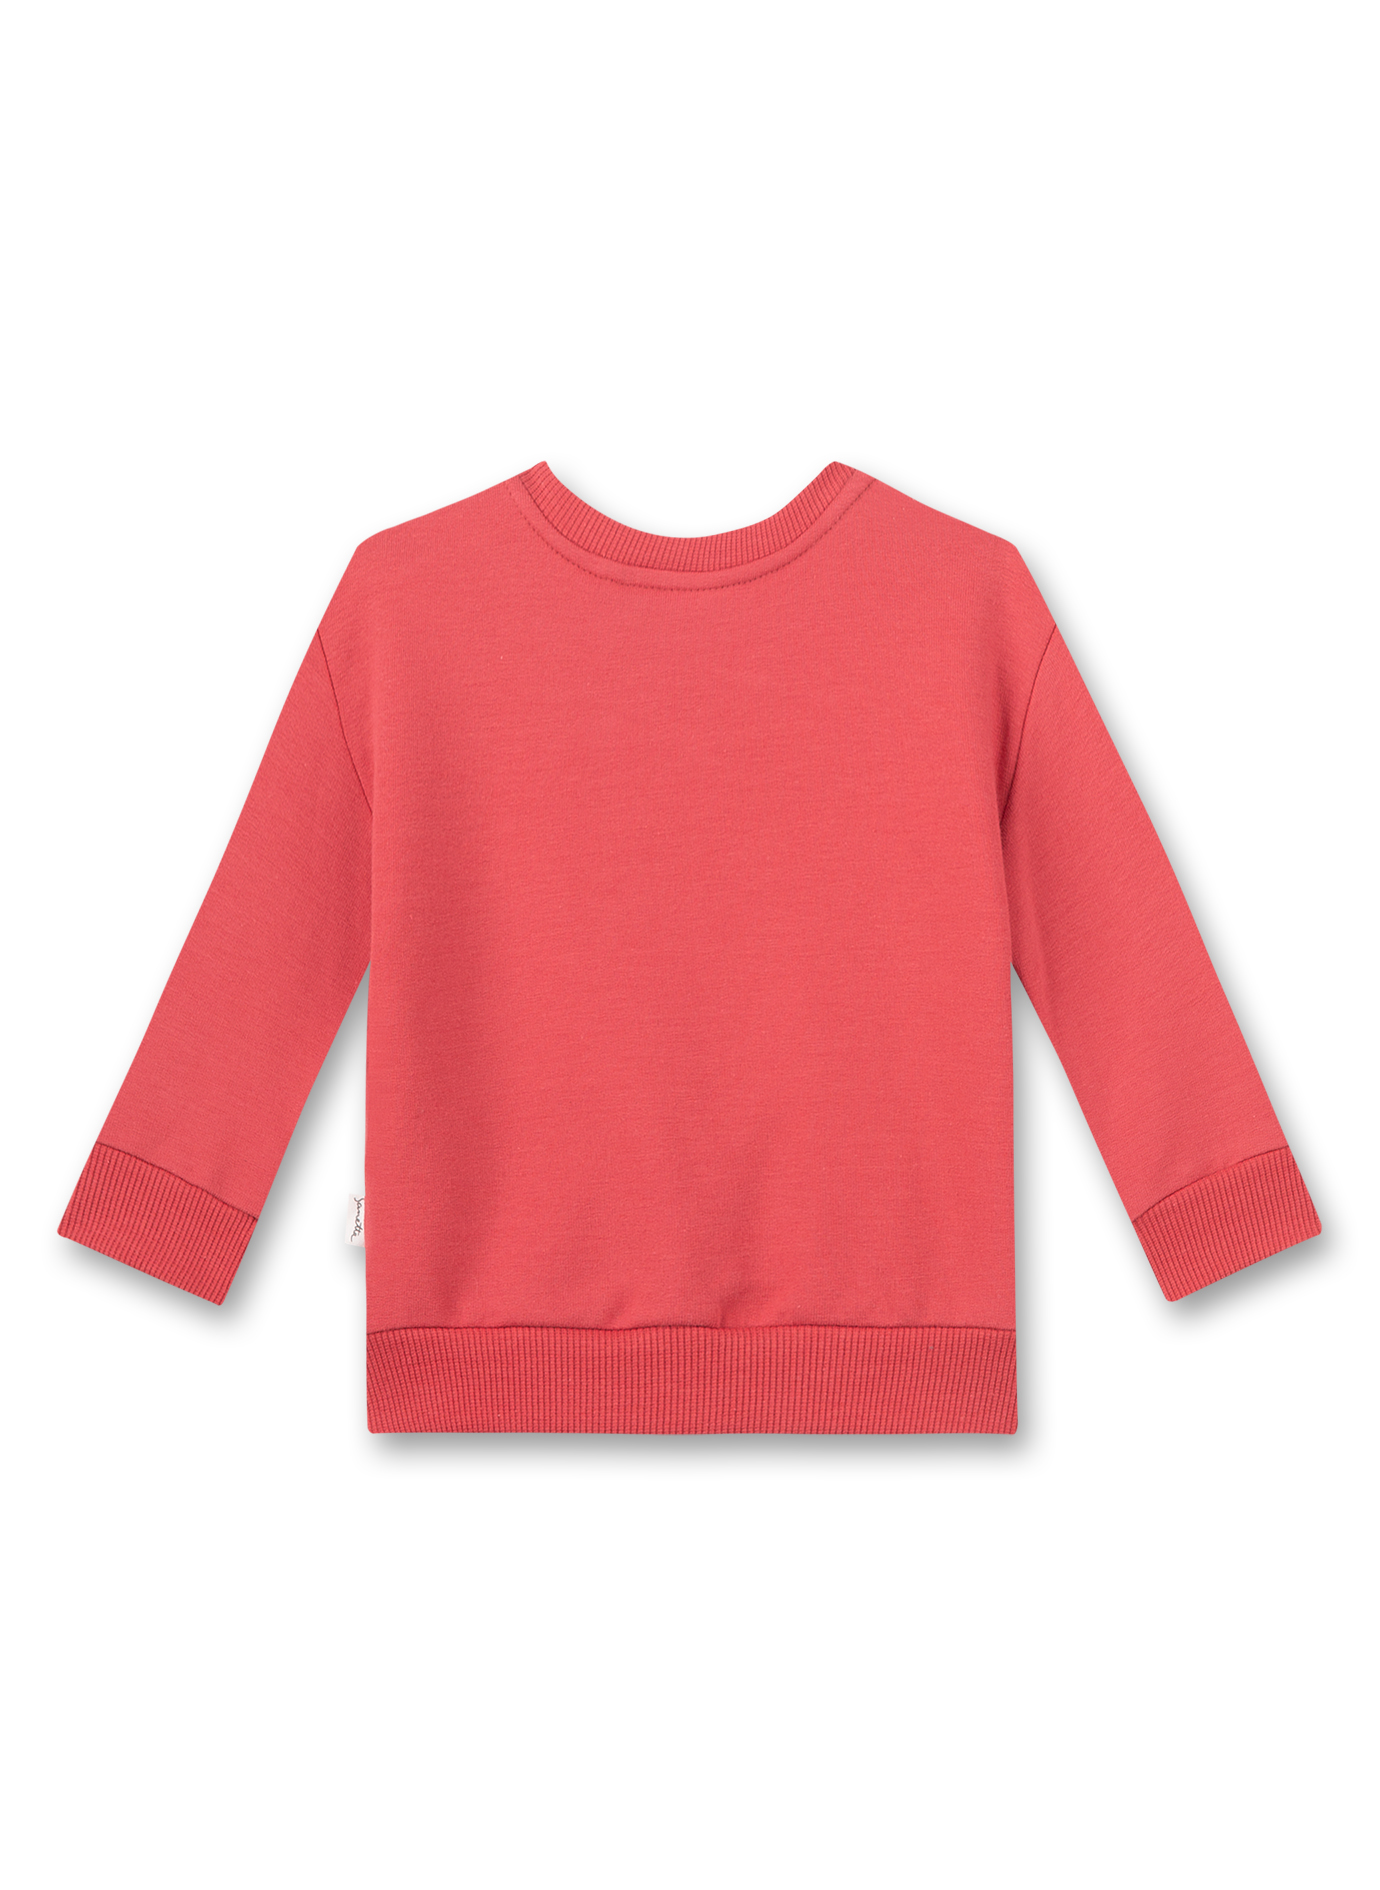 Mädchen-Sweatshirt Rot